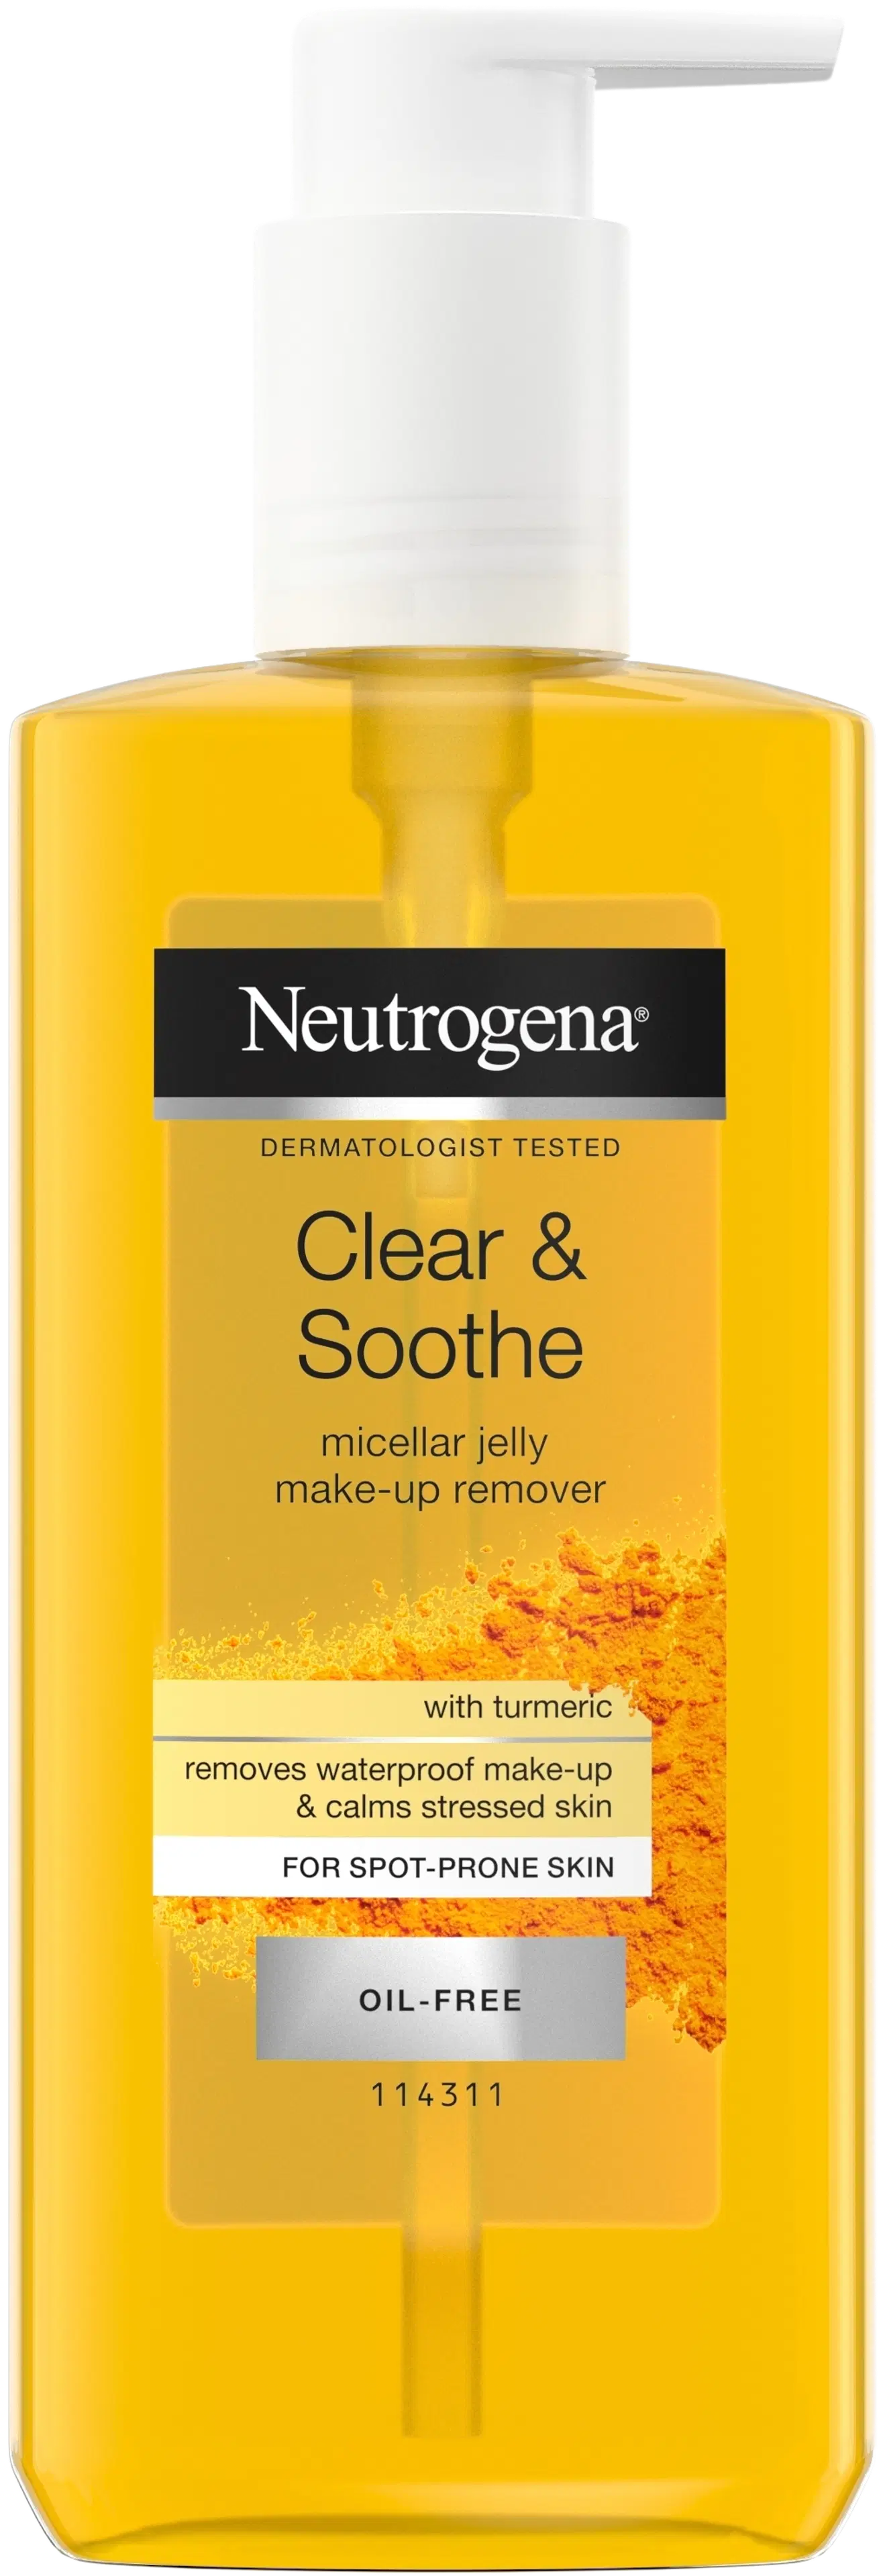 Neutrogena Clear & Soothe Micellar Jelly Make-up Remover miselli-meikinpoistogeeli 200 ml